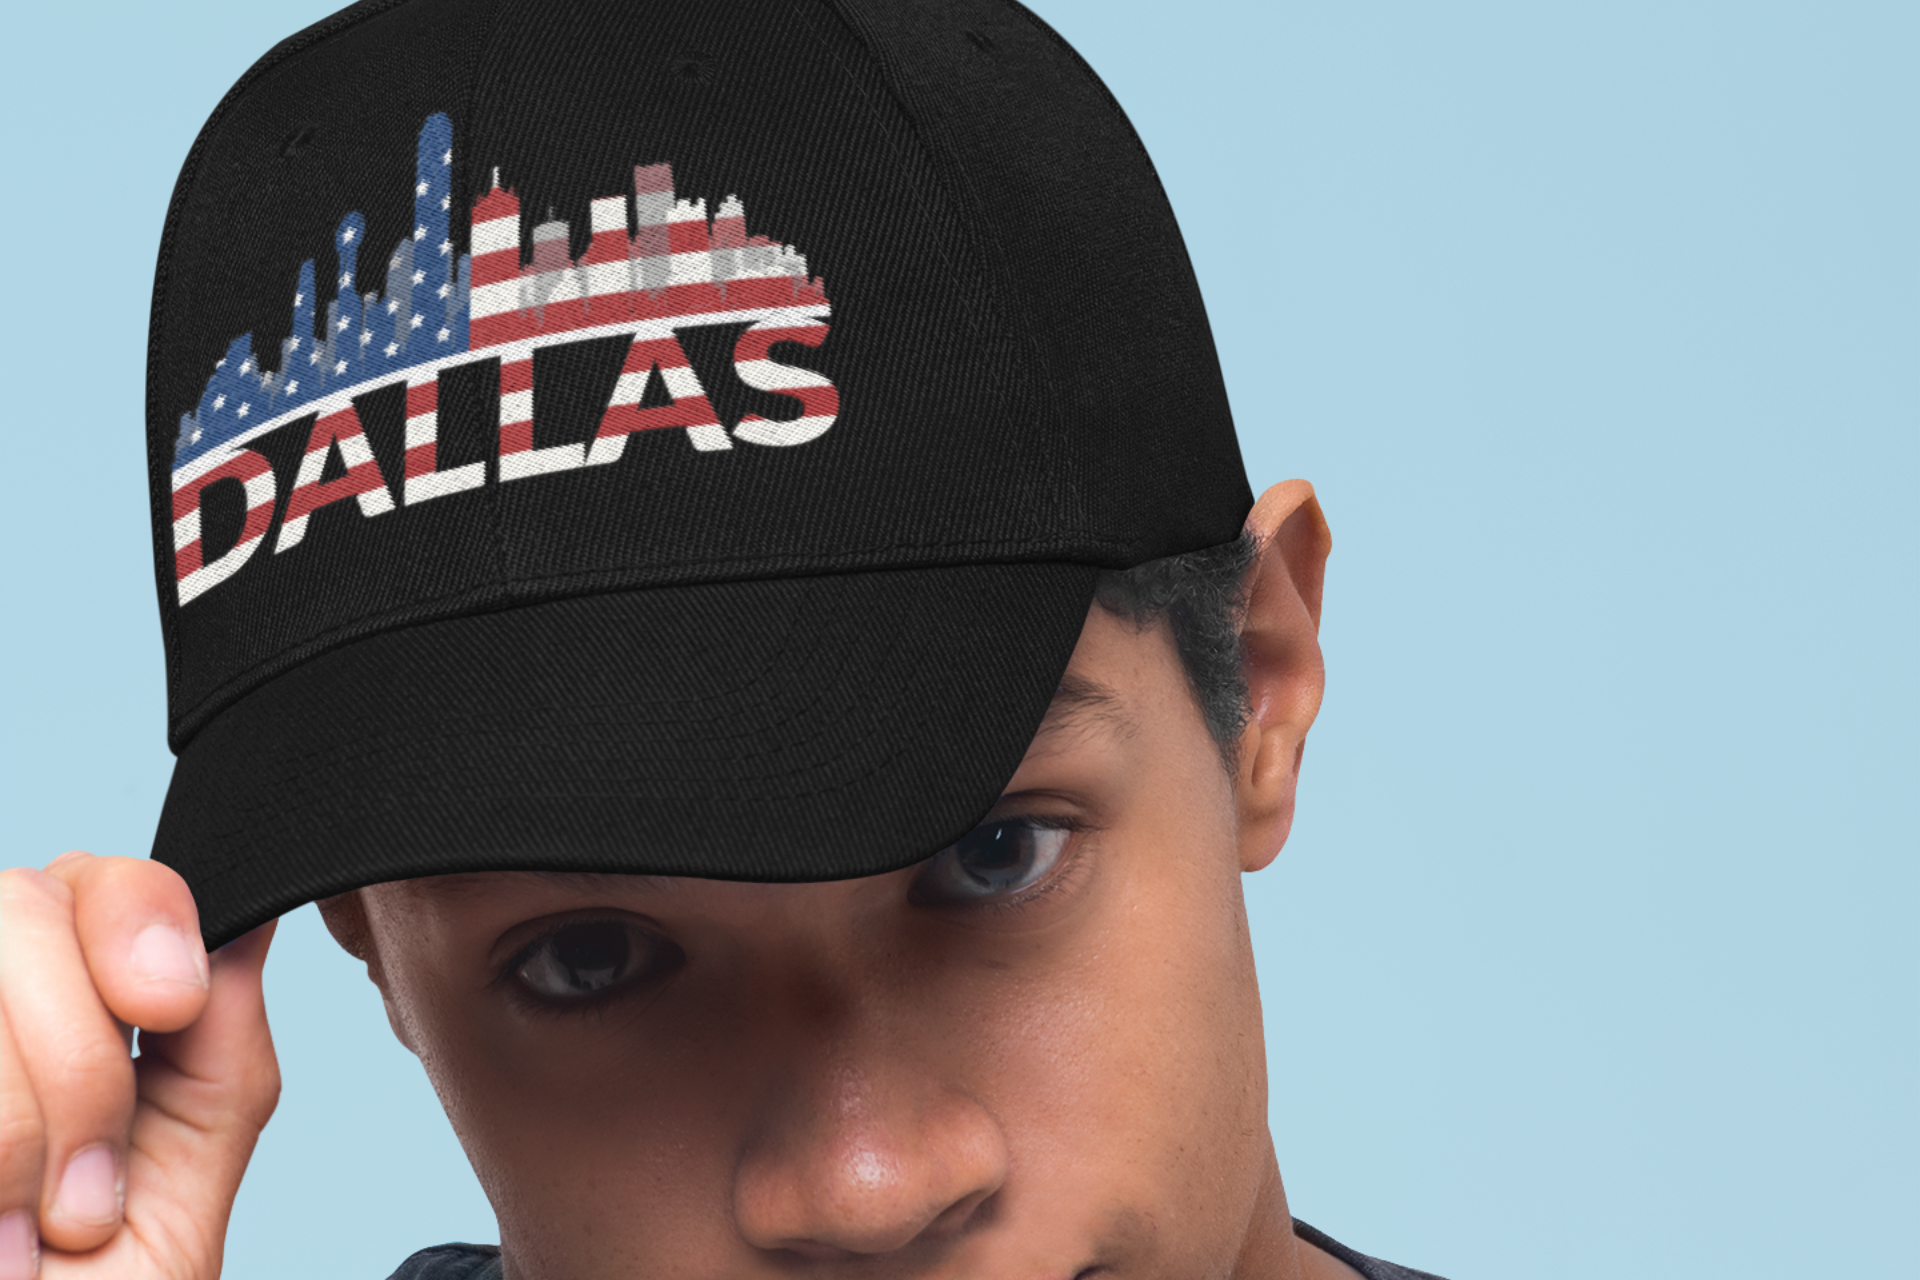 Unisex Twill Hat (Dallas)